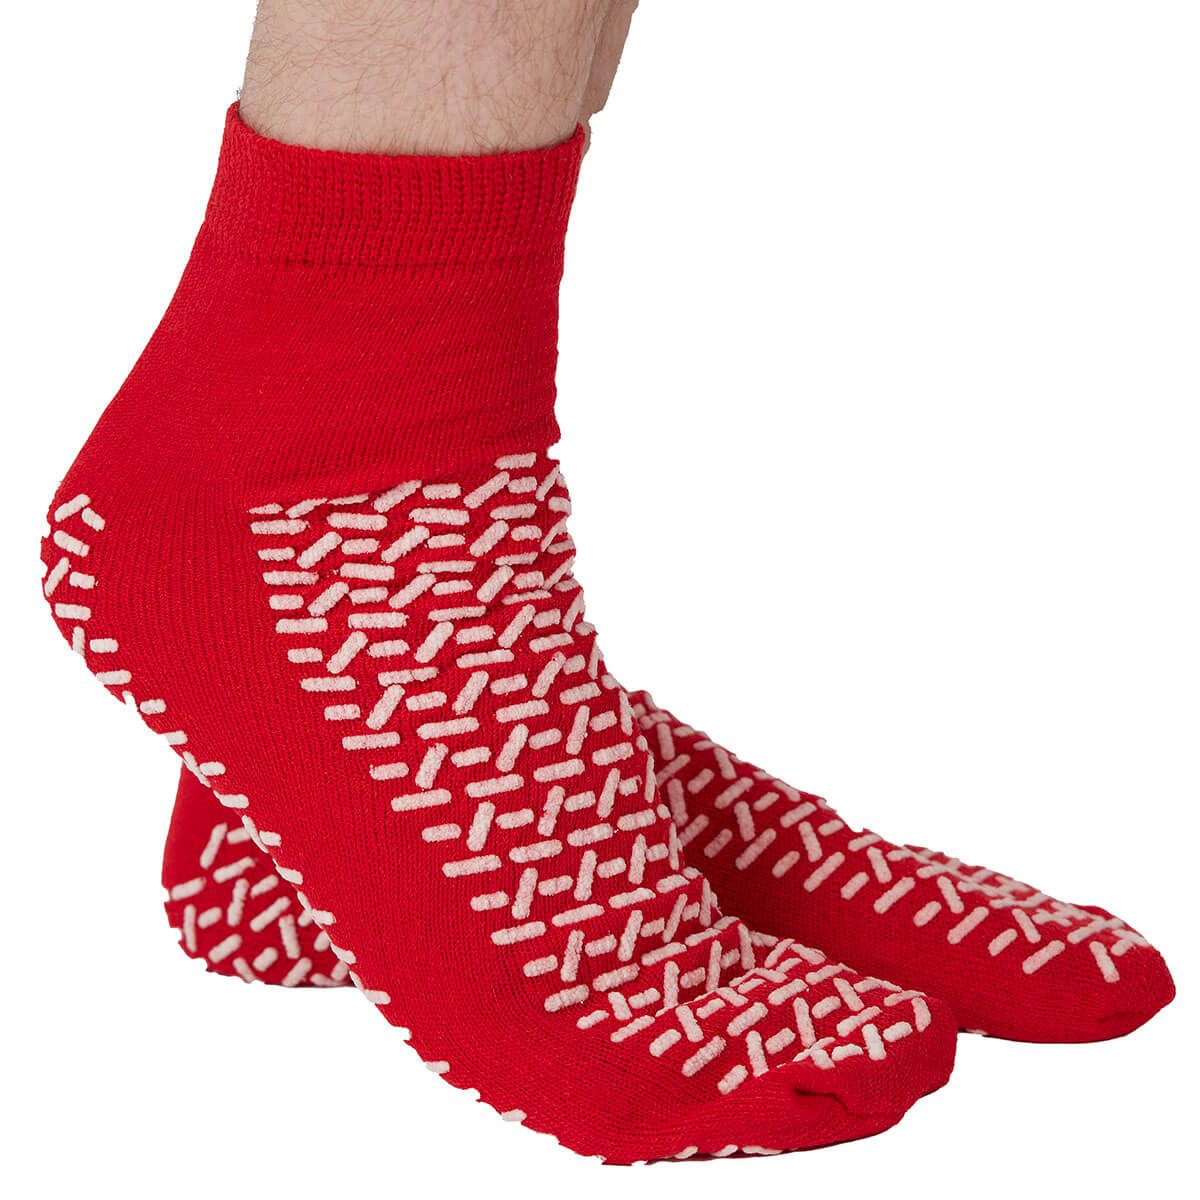 Fall Prevention Socks, Universal Size